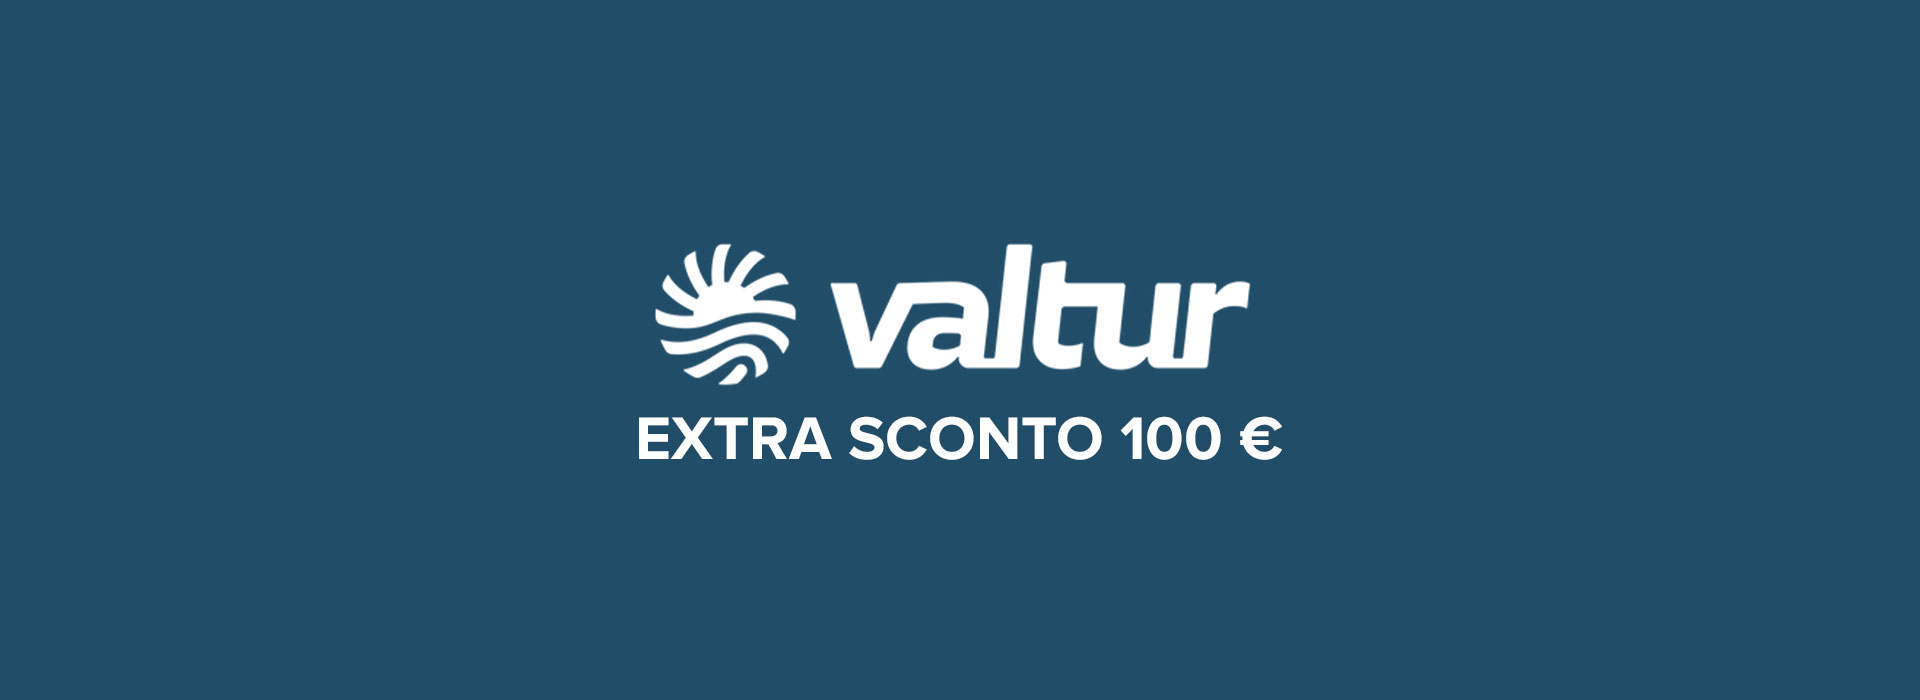 Promozione Valtur: Extra sconto 100 €